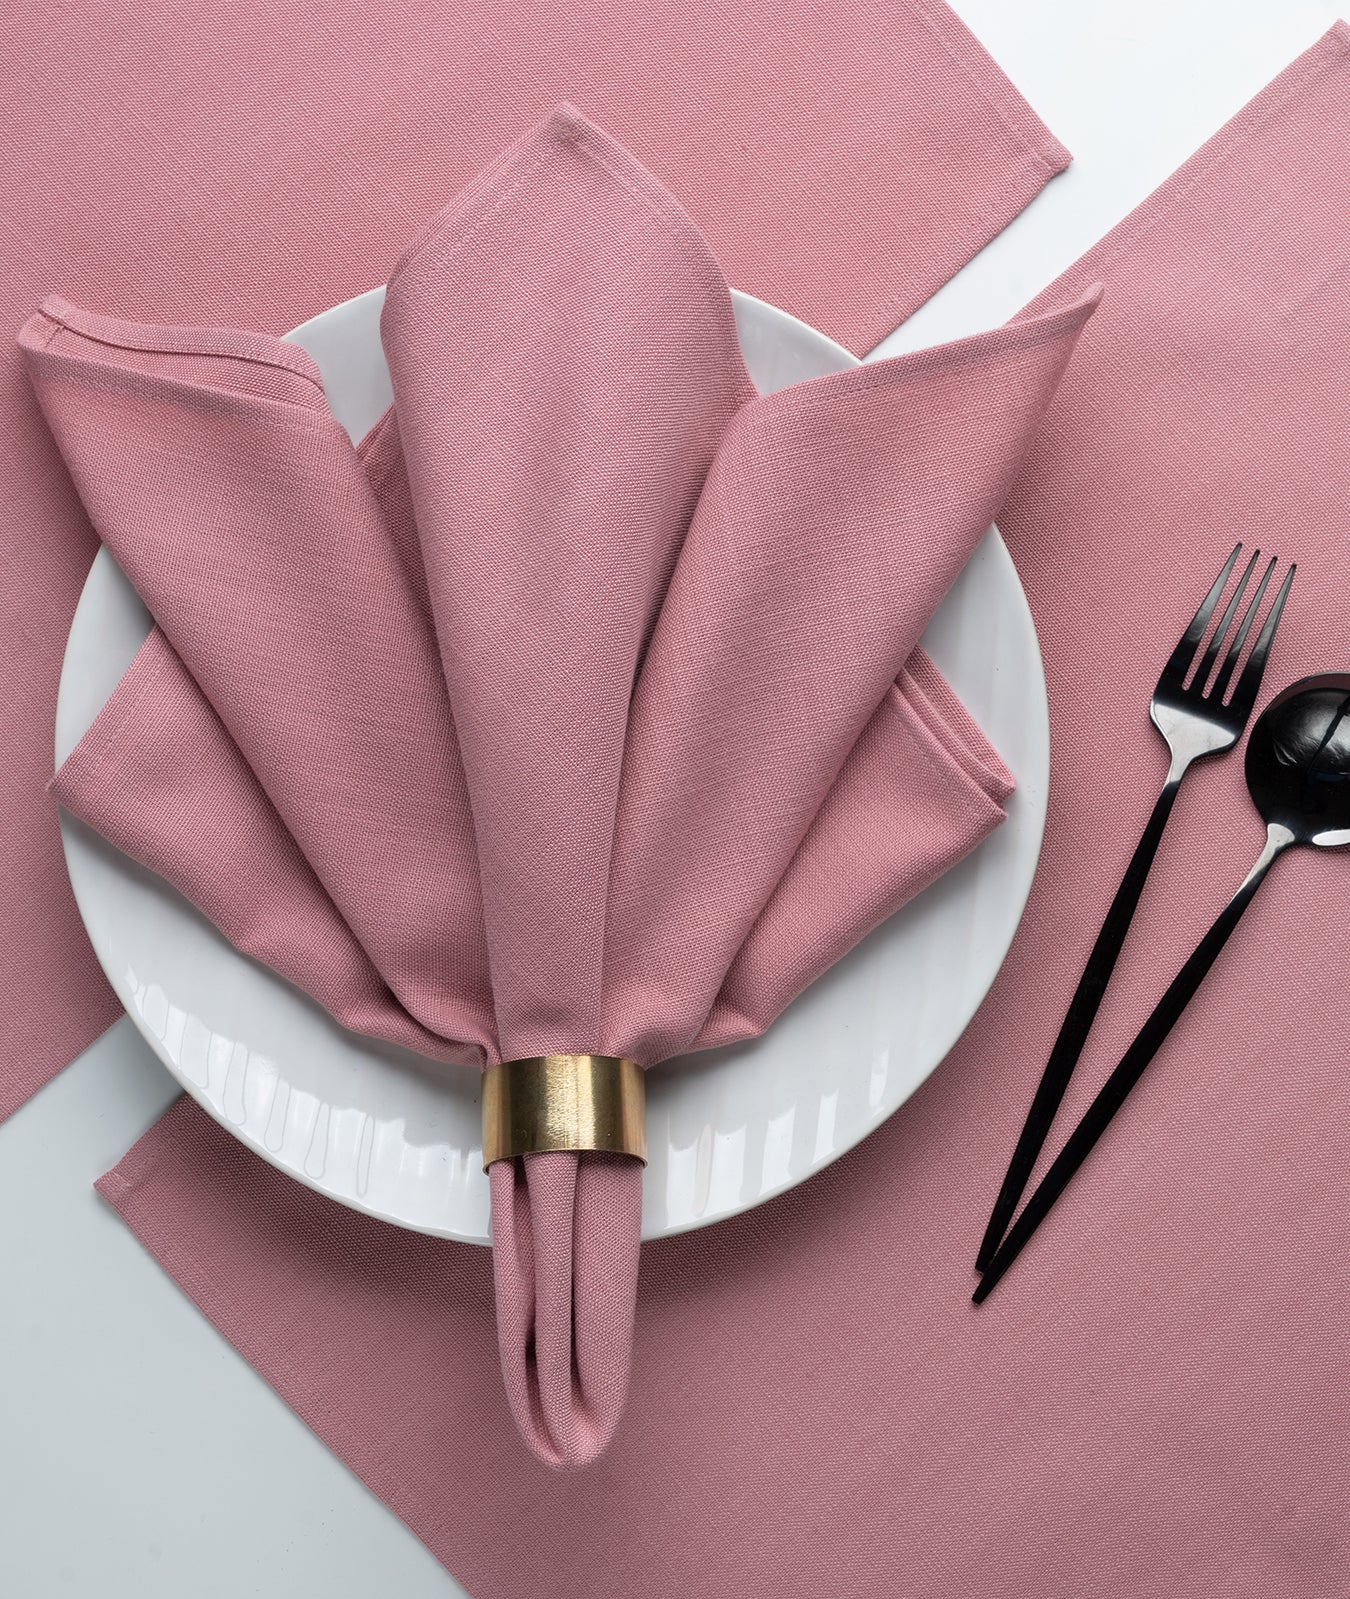 Dusty Pink Linen Textured Dinner Napkins 20 x 20 Inch Set of 4 - Plain